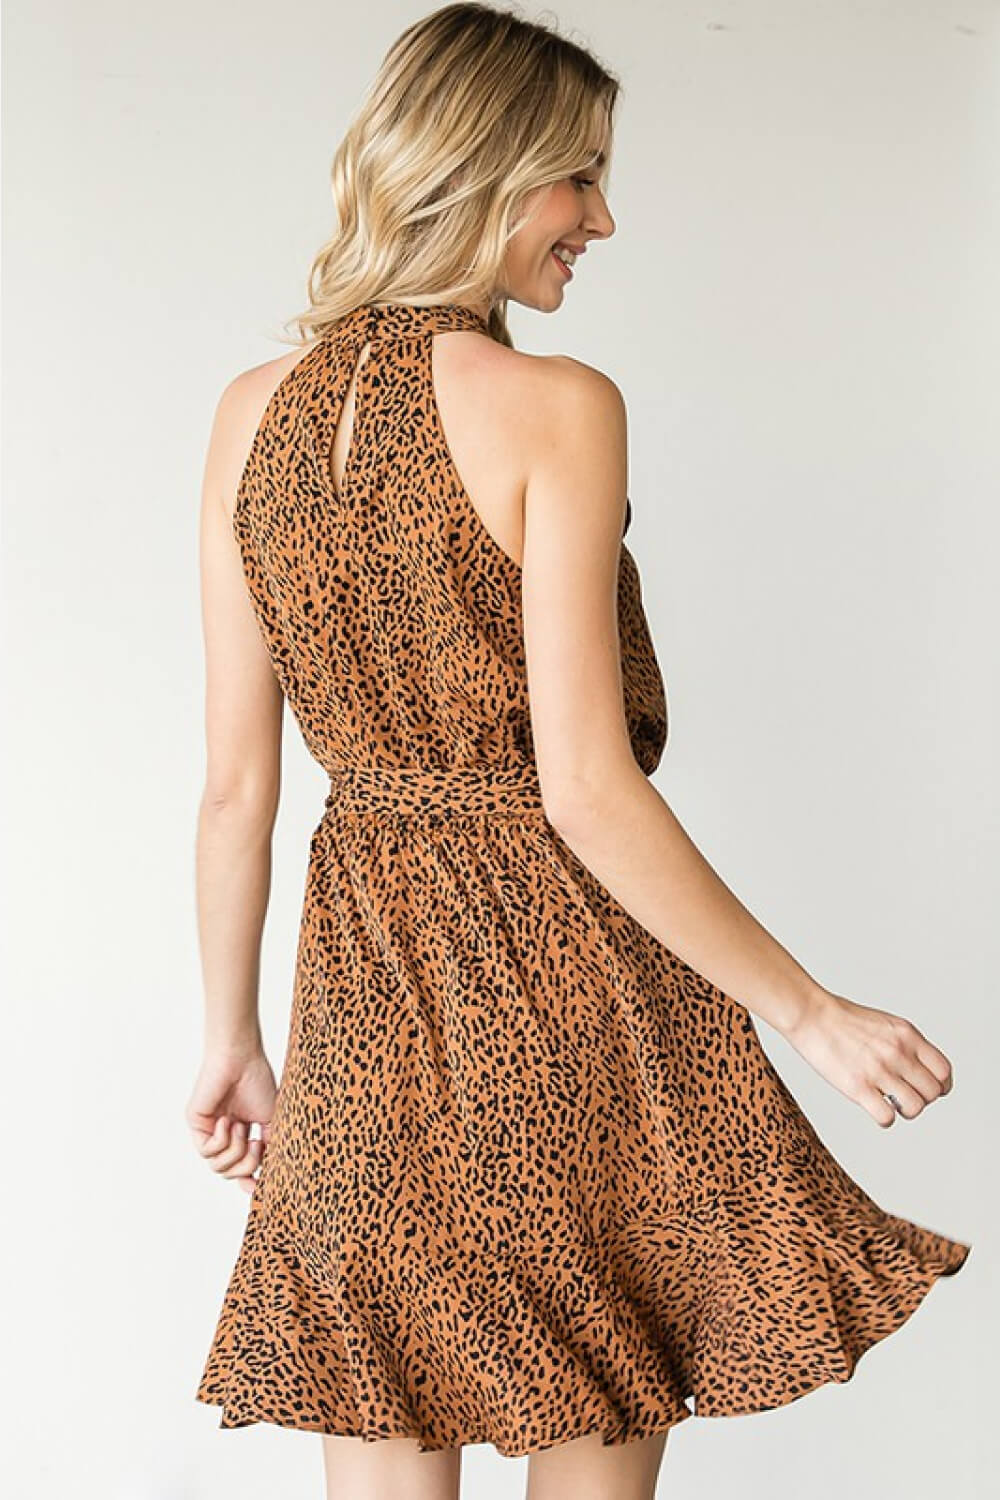 First Love Gwedolyn Leopard Belted Mini Dress  RYSE Clothing Co.   